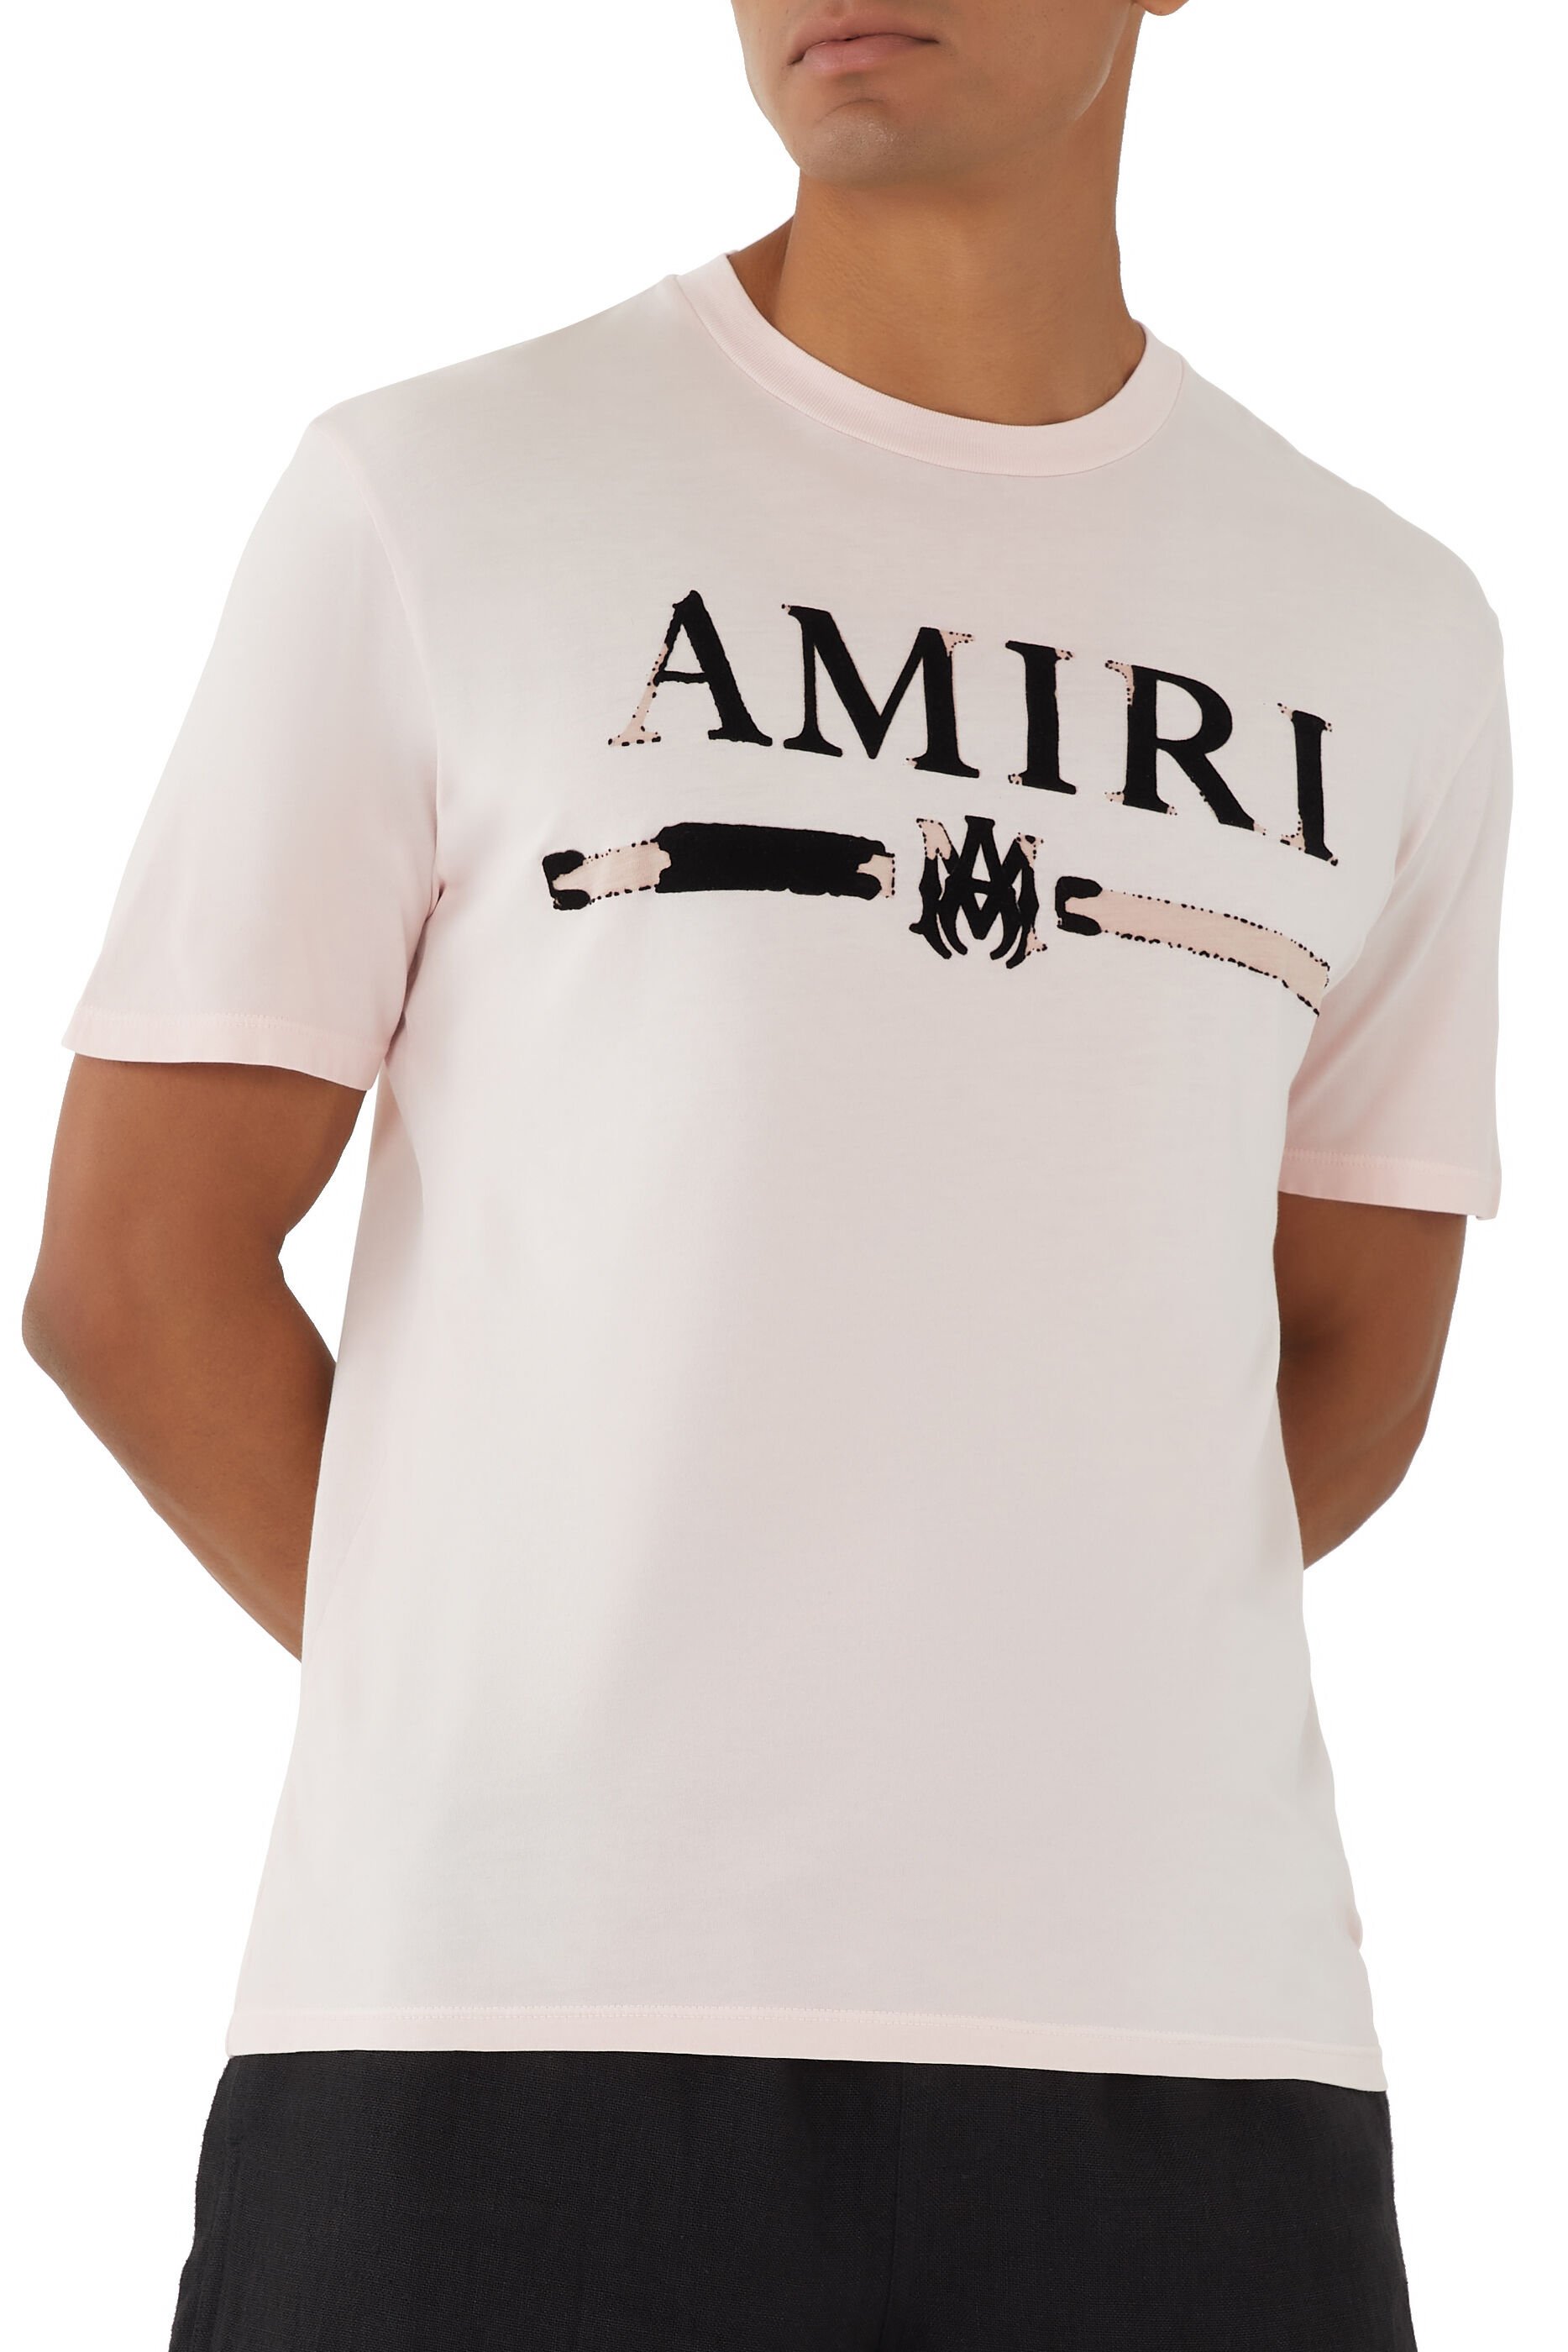 AMIRI アミリ M.A. Bar Appliqué Tシャツ ブラック M - Tシャツ ...